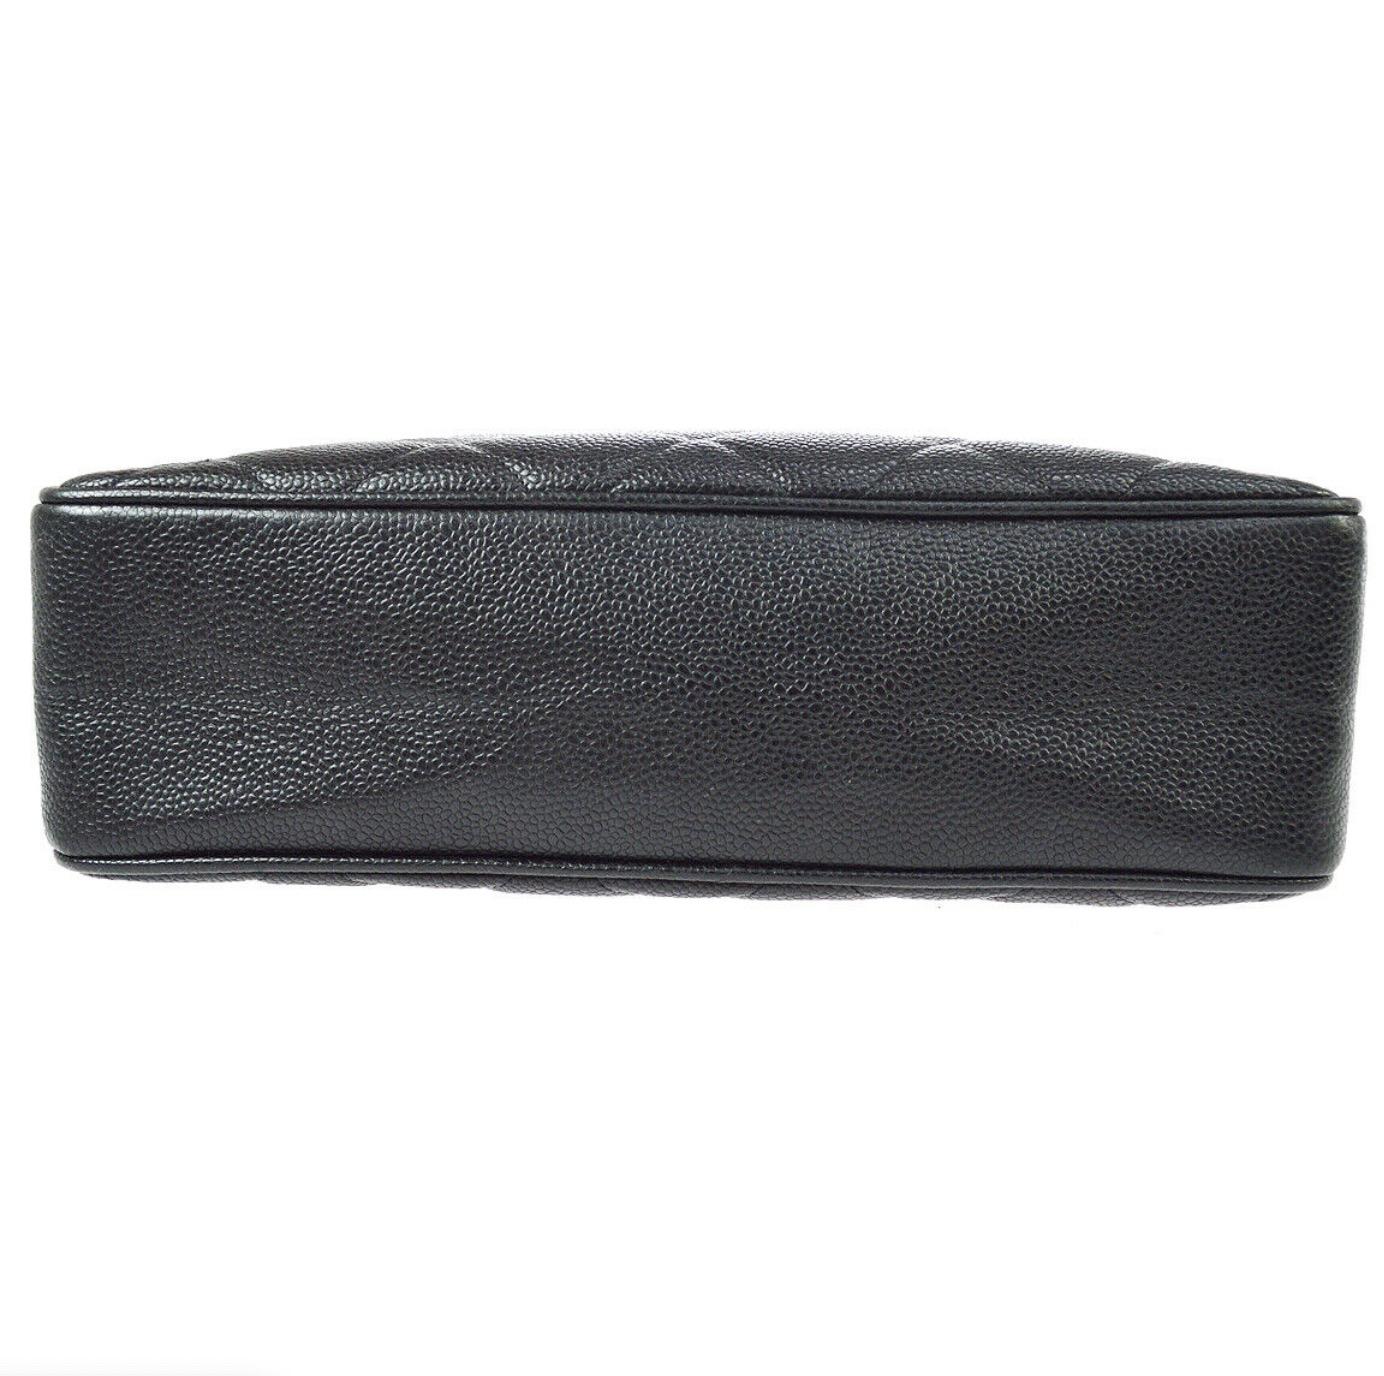 Chanel Black Leather Caviar Gold Chain Shopper Carryall Shoulder Tote Bag 1